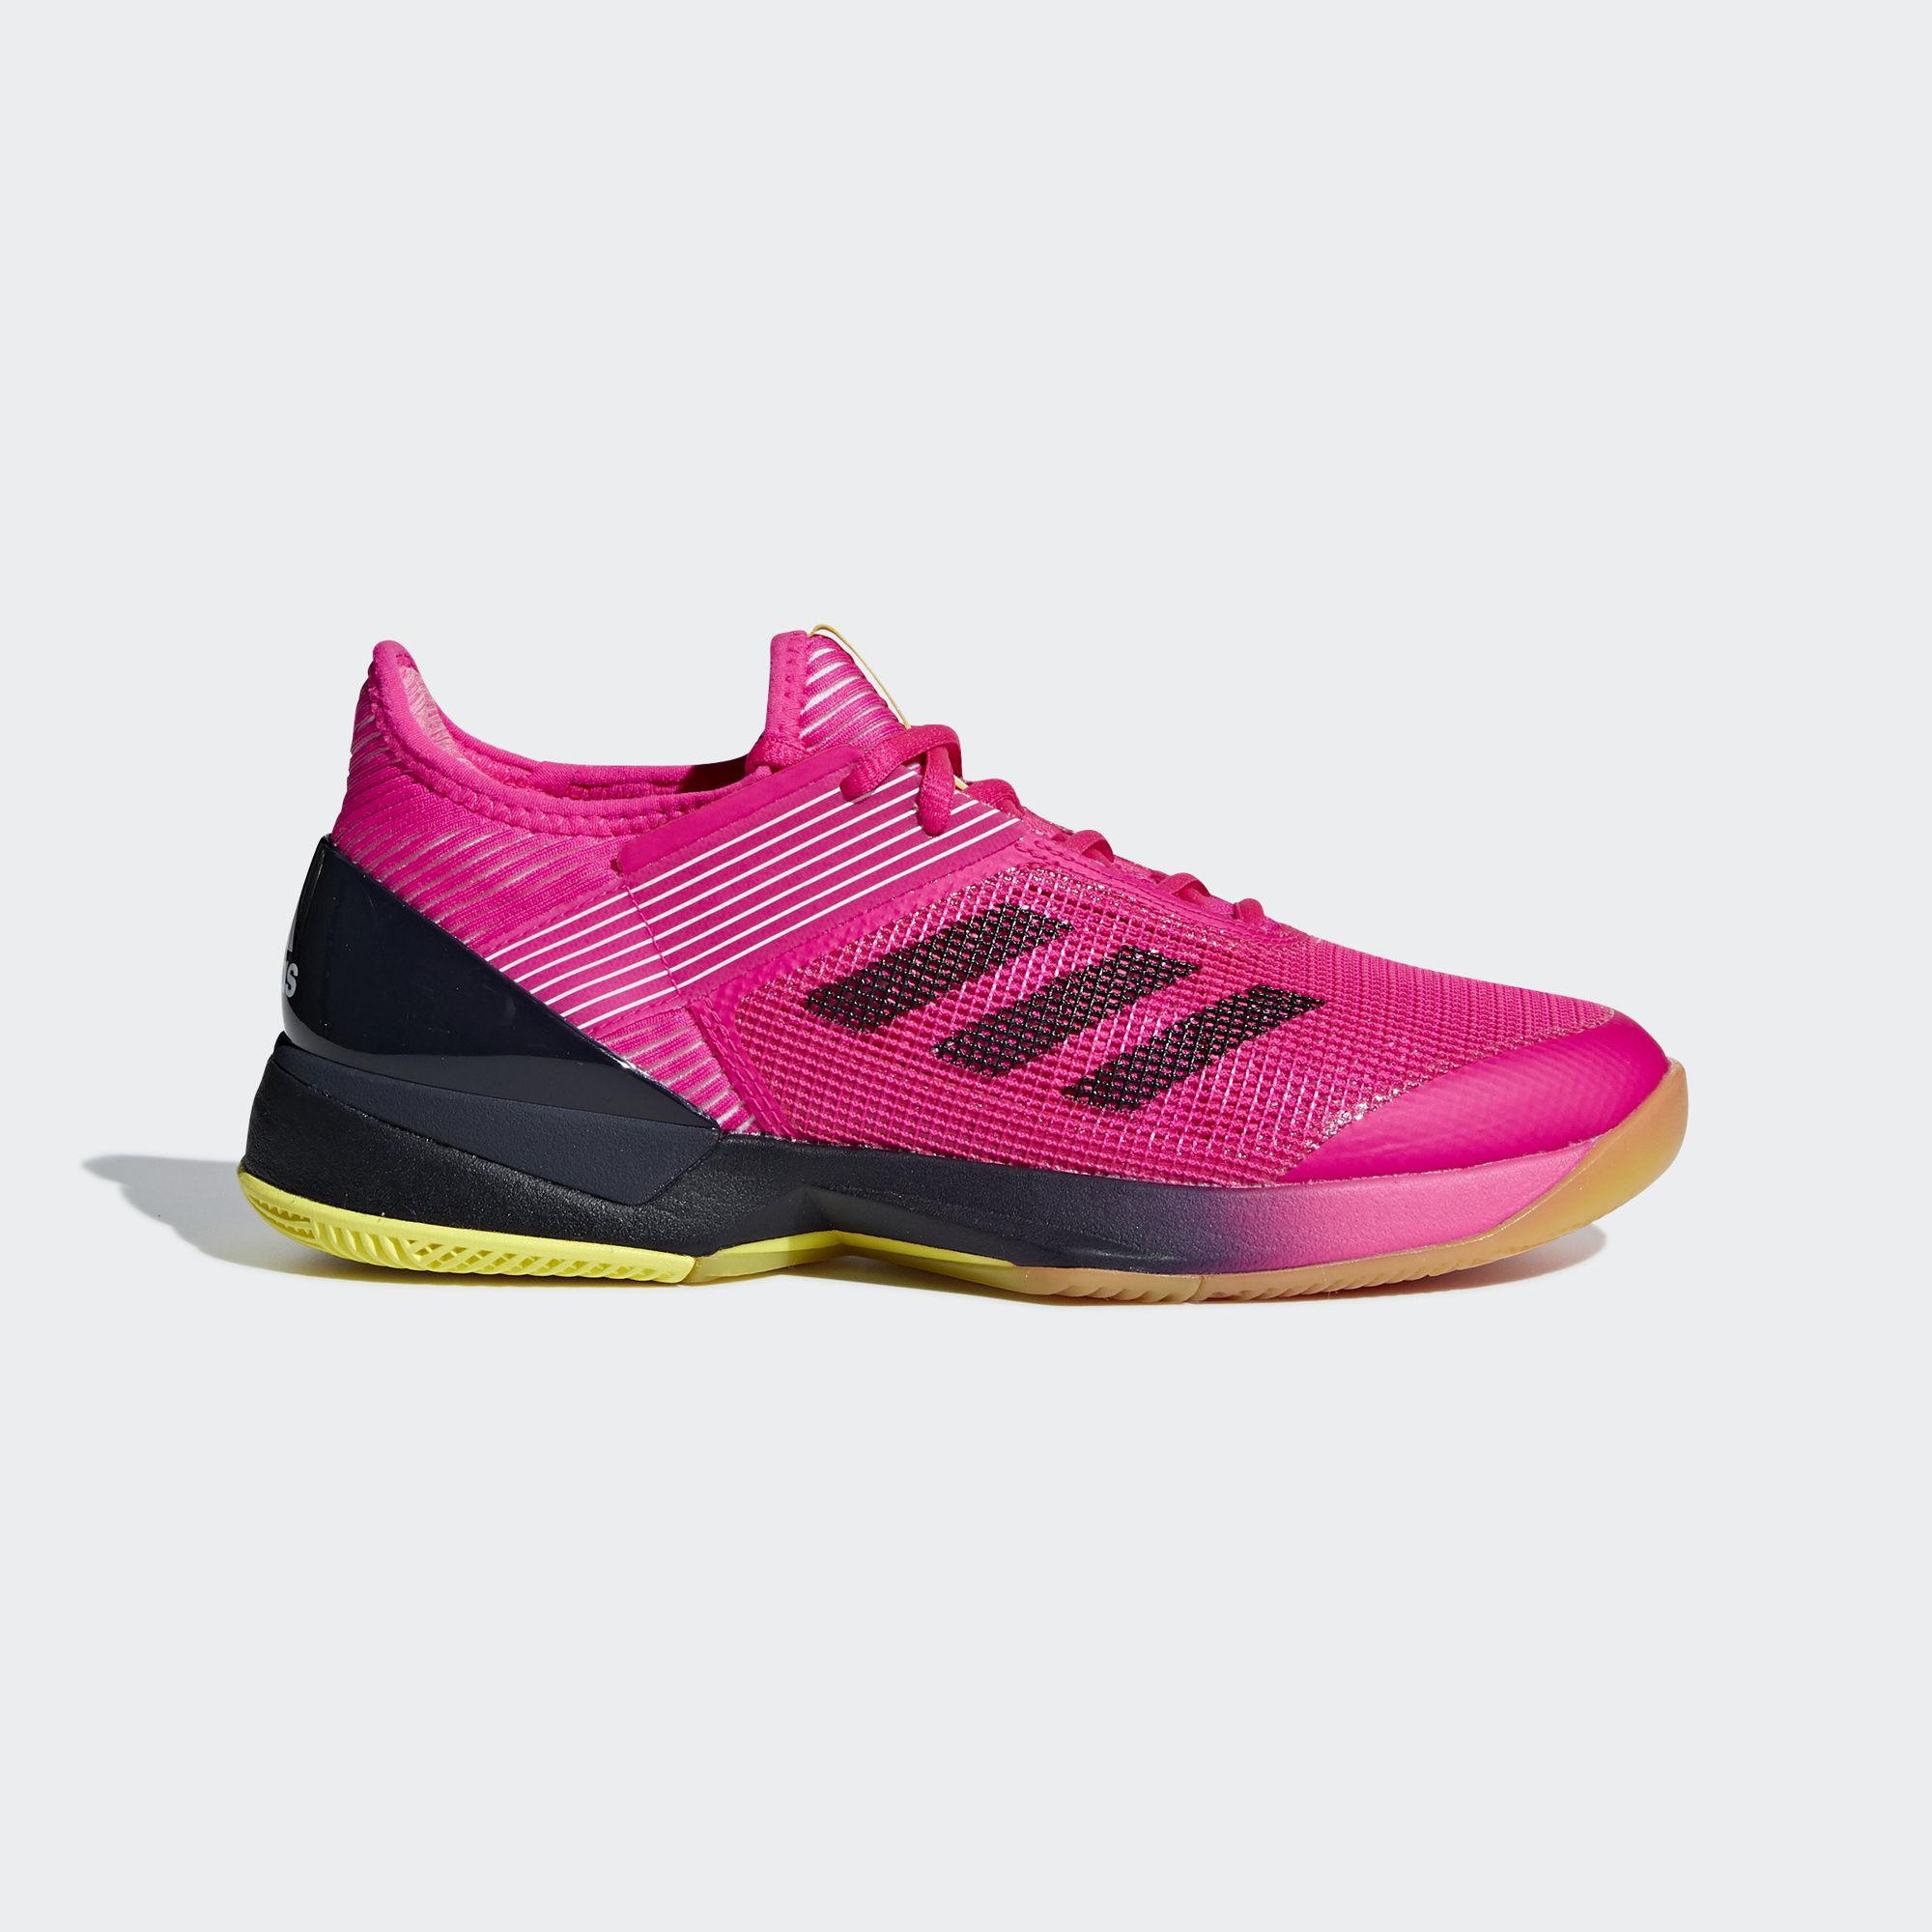 Adidas Womens Adizero Ubersonic  Tennis Shoes - Shock Pink/Legend Ink -  